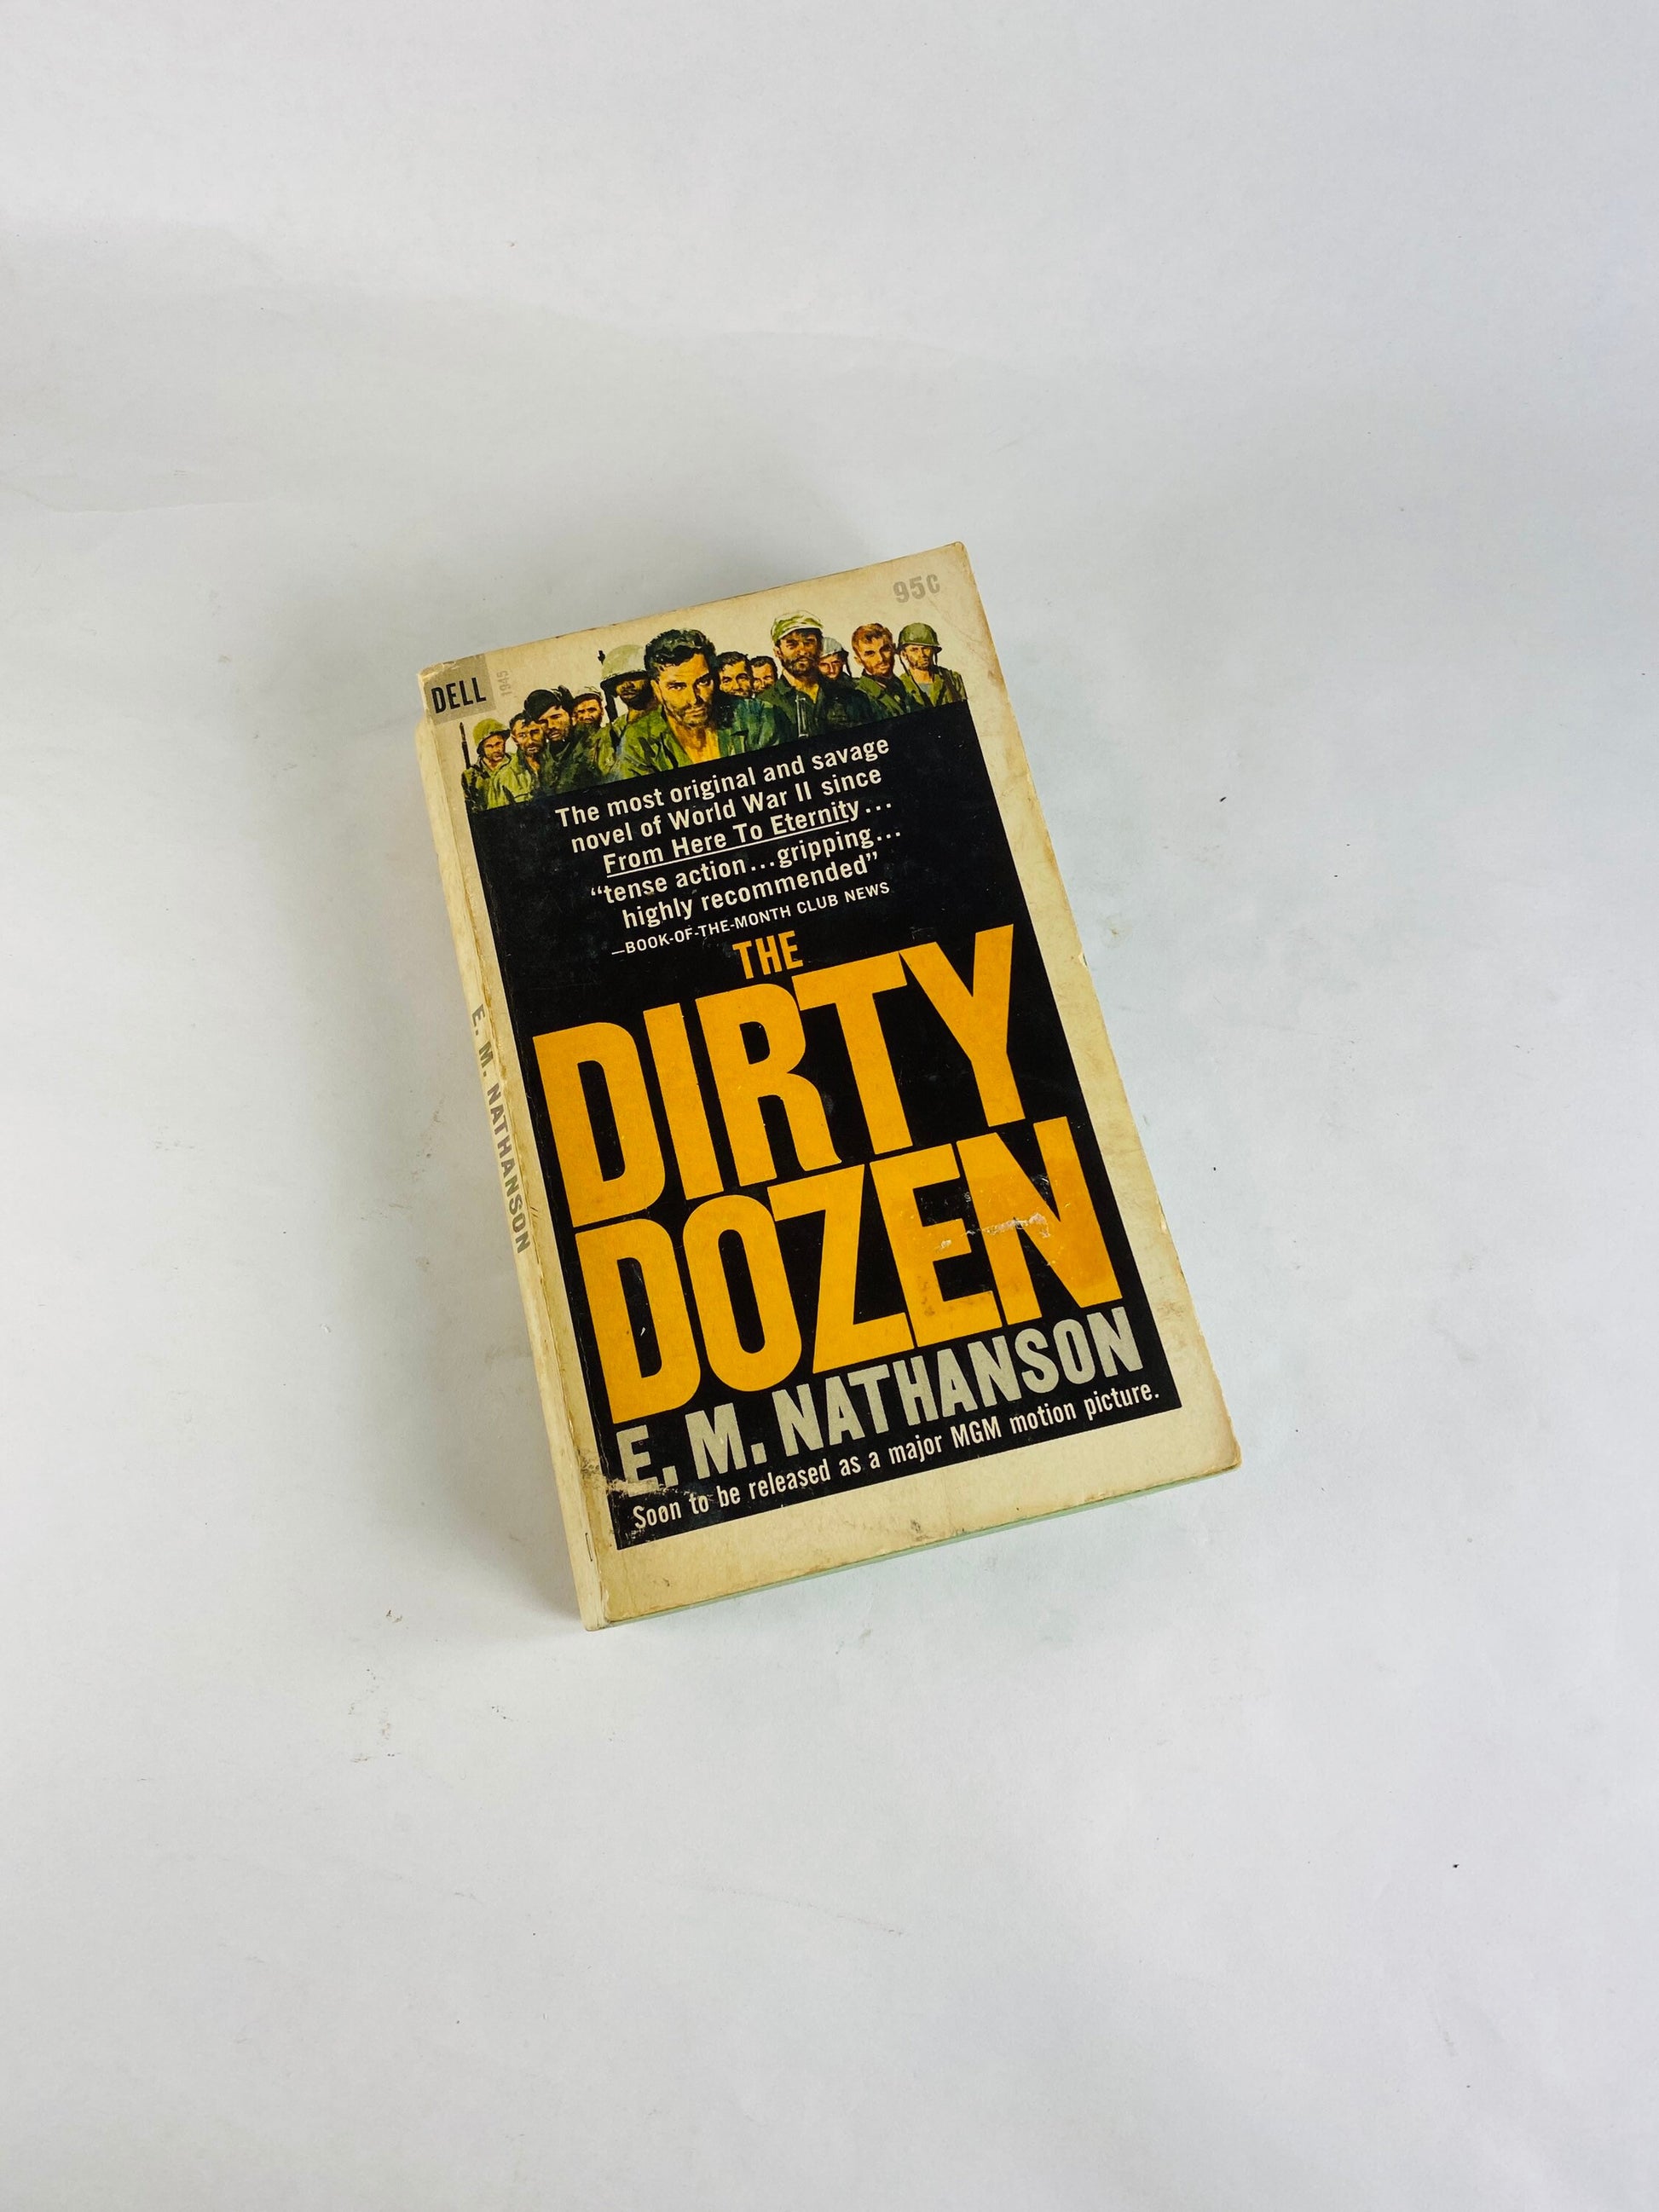 1966 Dirty Dozen vintage paperback book by EM Nathanson about violent criminals on a combat mission under the training Army major